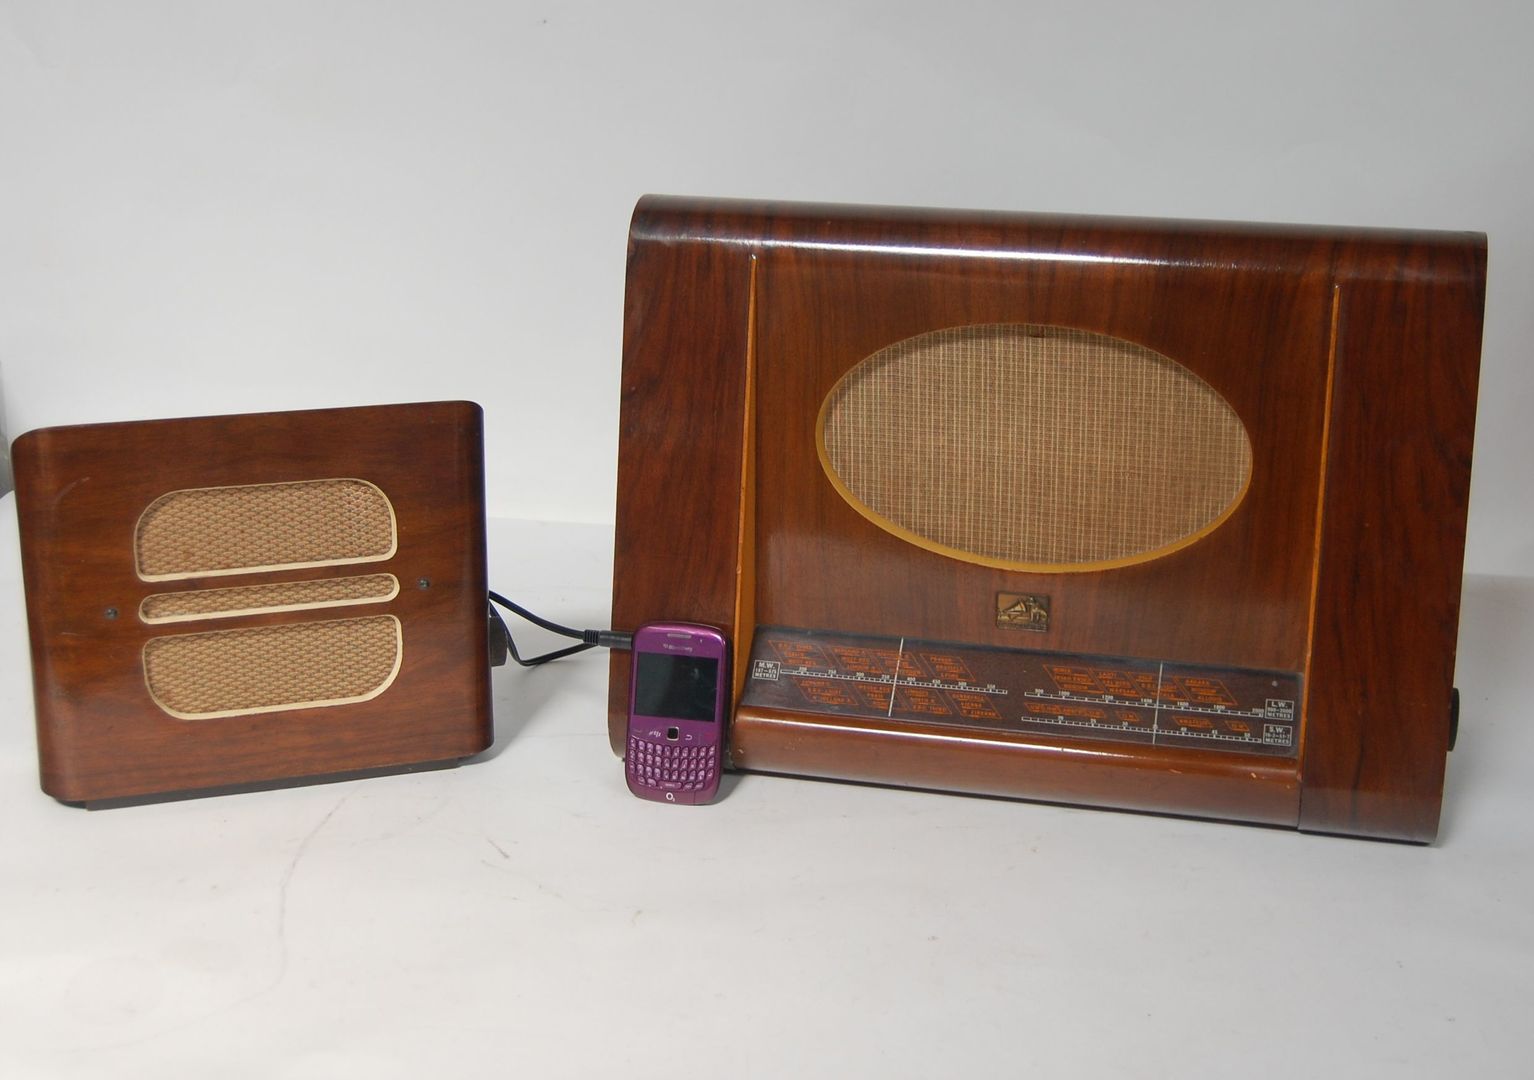 Vintage 1950s HMV Wooden Valve Radio Model 1122 & 1940s Stentorian Bristol Extension Wooden Speaker Retro Bazaar Ltd Гостиные в эклектичном стиле